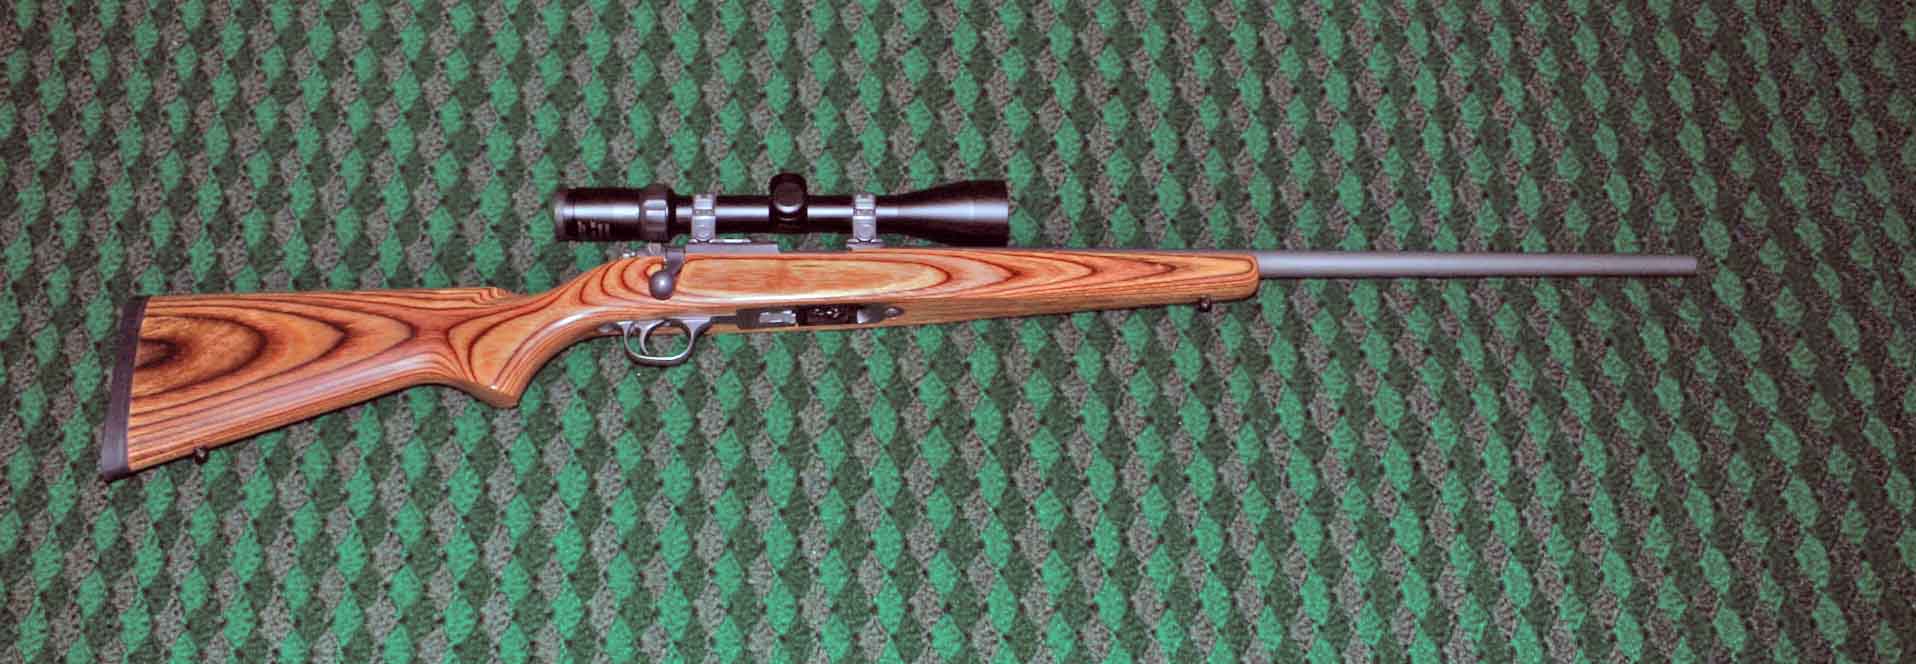 Ruger 10 22 Walnut Gun Stock 22 Rifle.